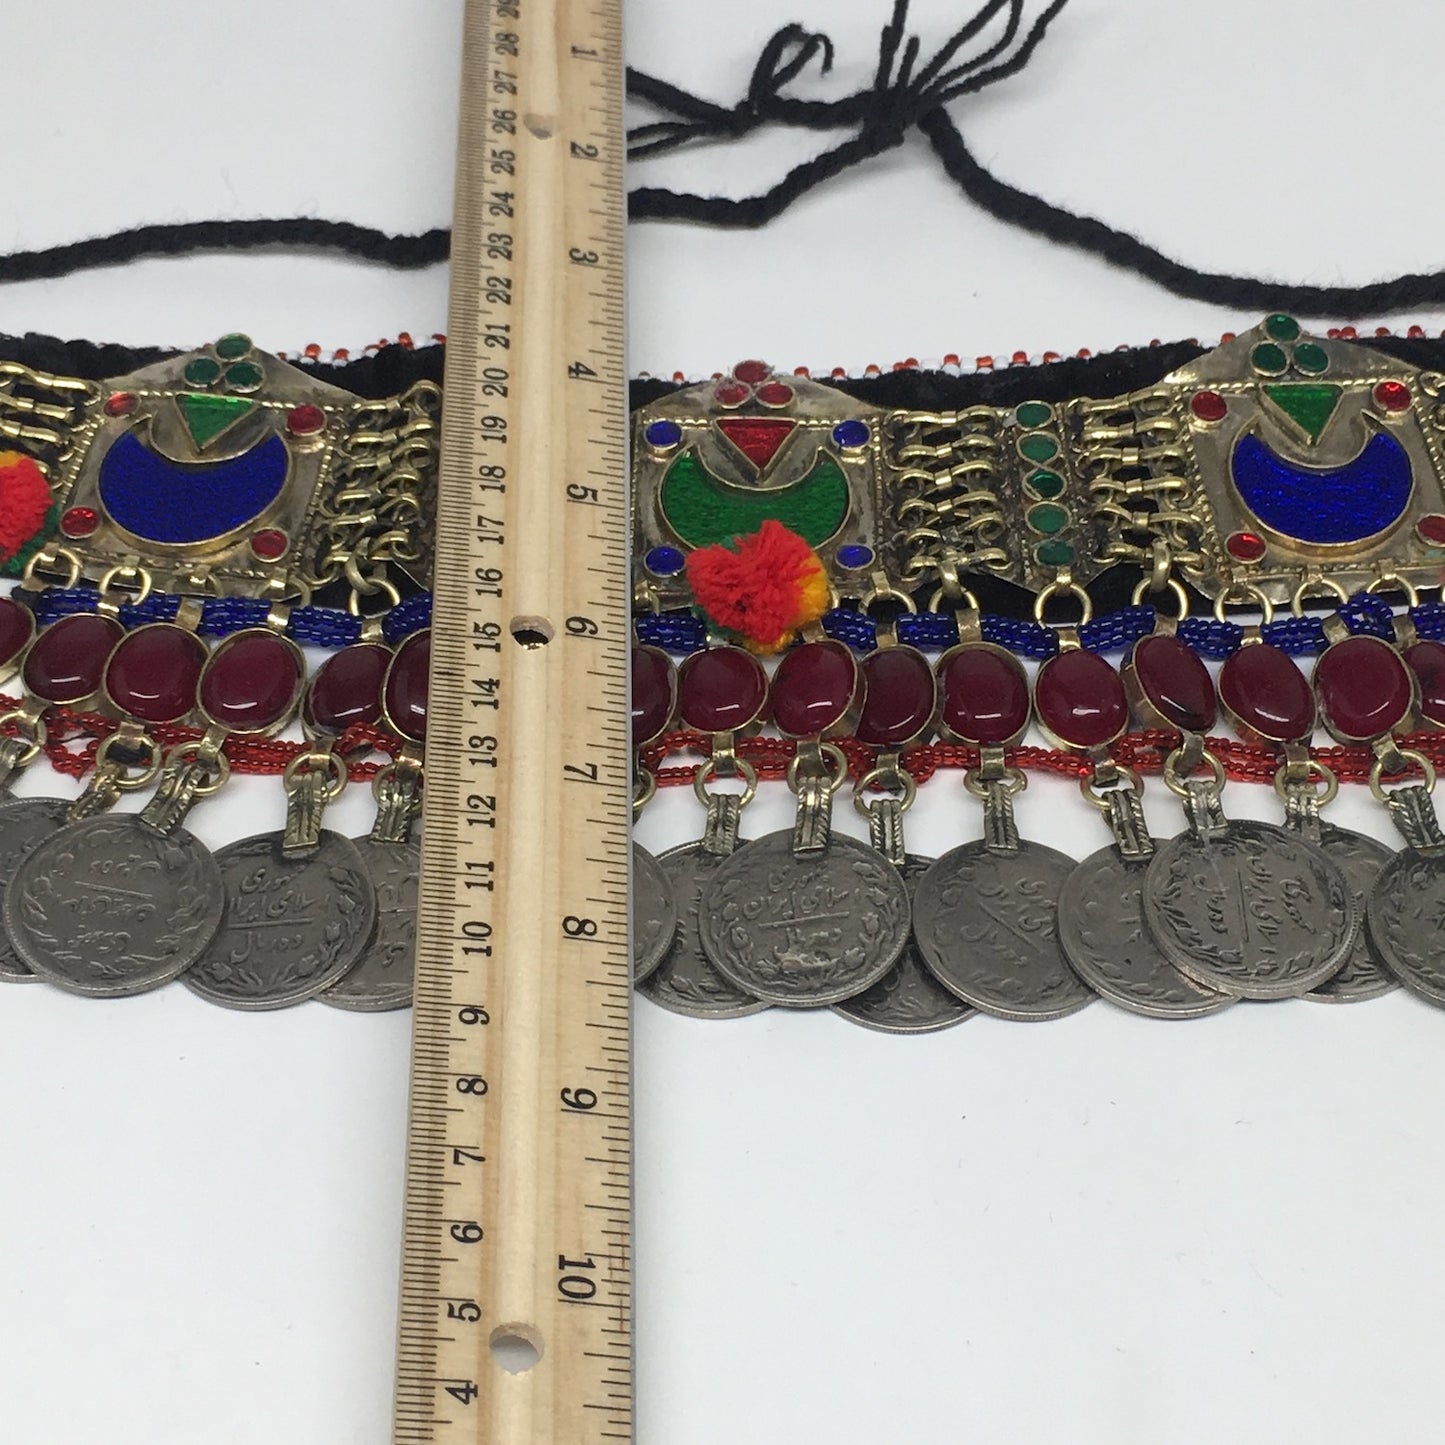 11.75"x4.5" Kuchi Choker Multi-Color Tribal Gypsy Bohemian Statement Coins,KC513